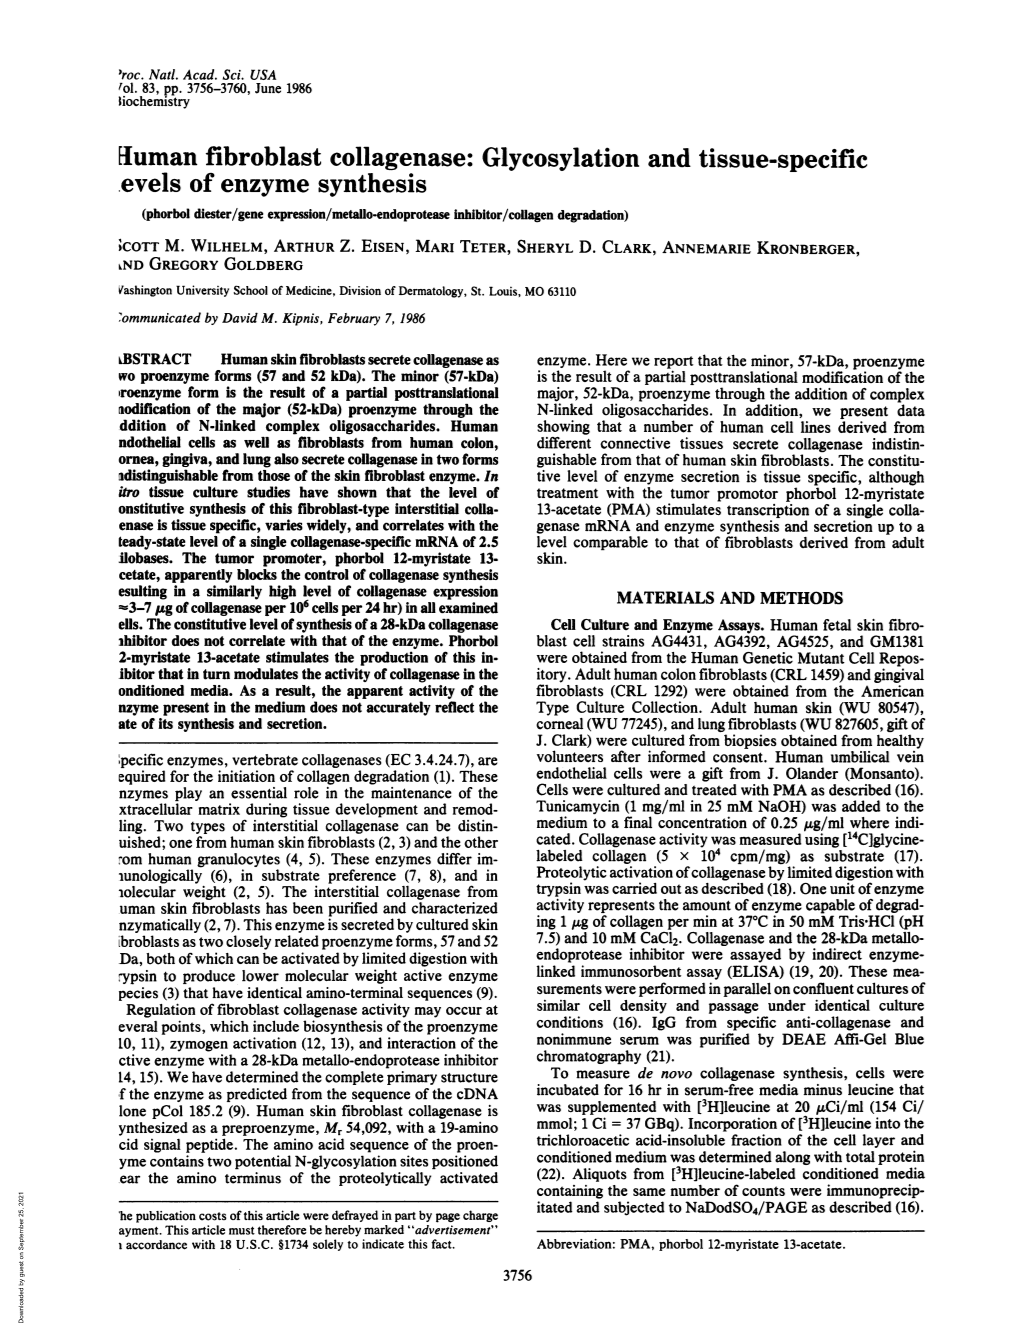 Human Fibroblast Collagenase: Glycosylation and Tissue-Specific